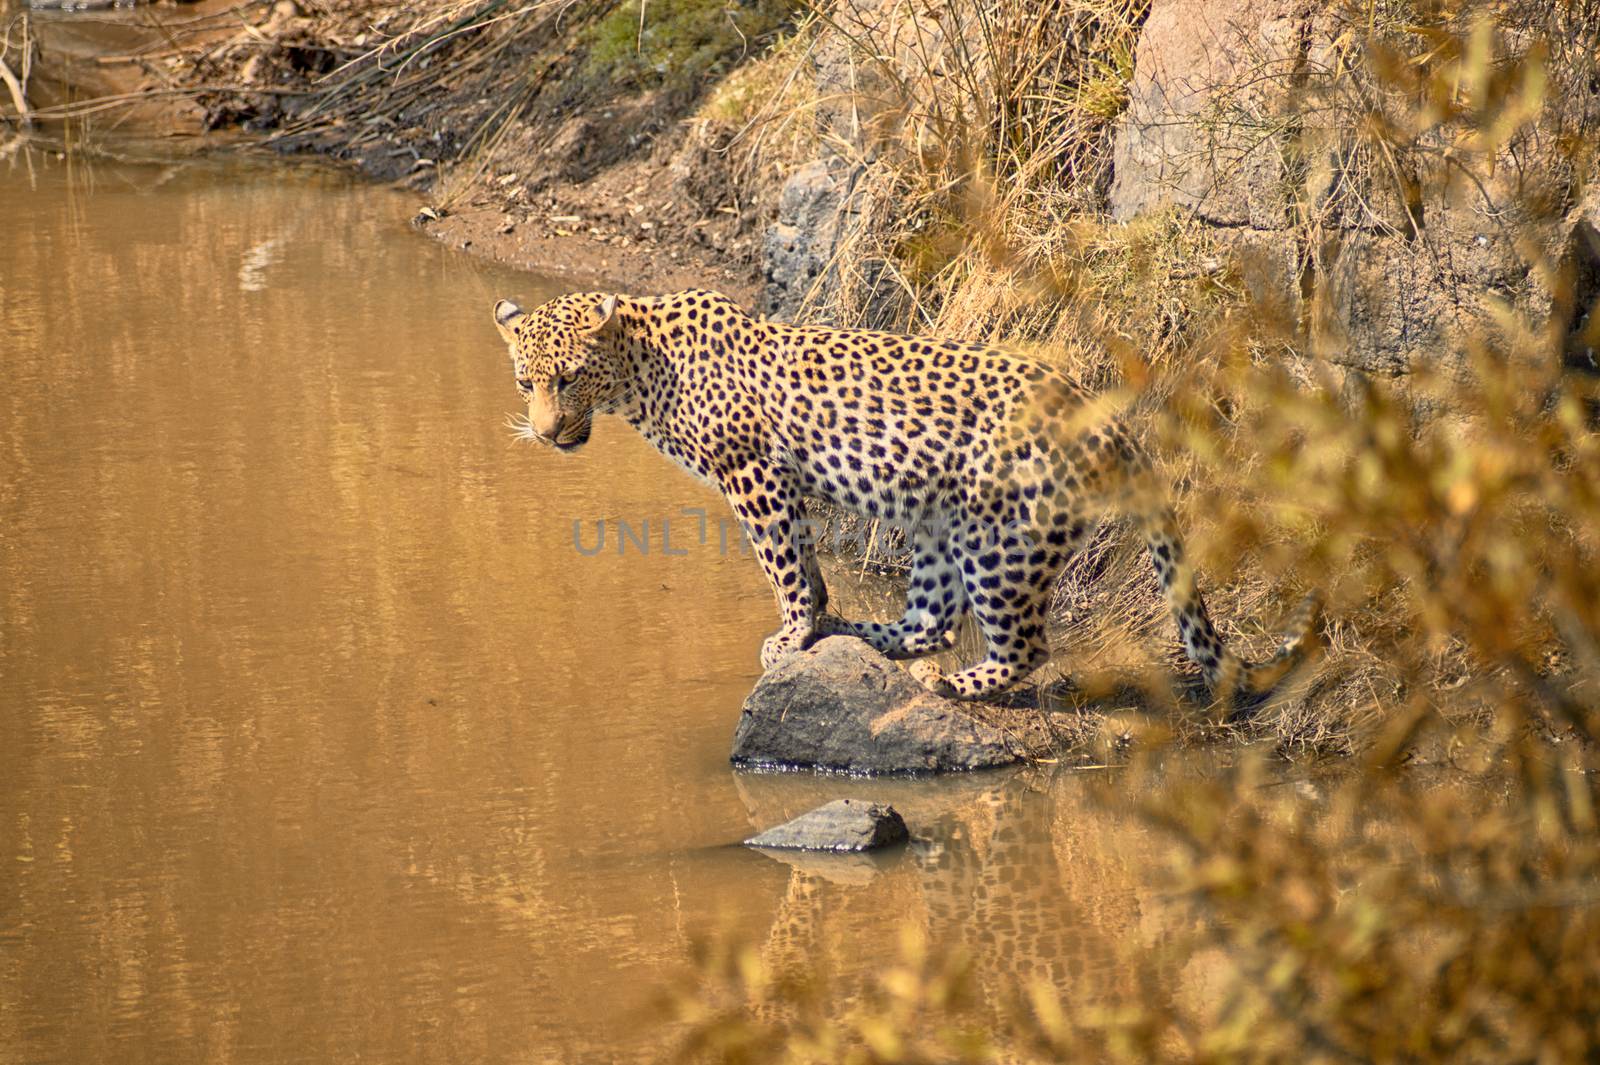 Leopard looking for fish in a waterhole by Sportactive